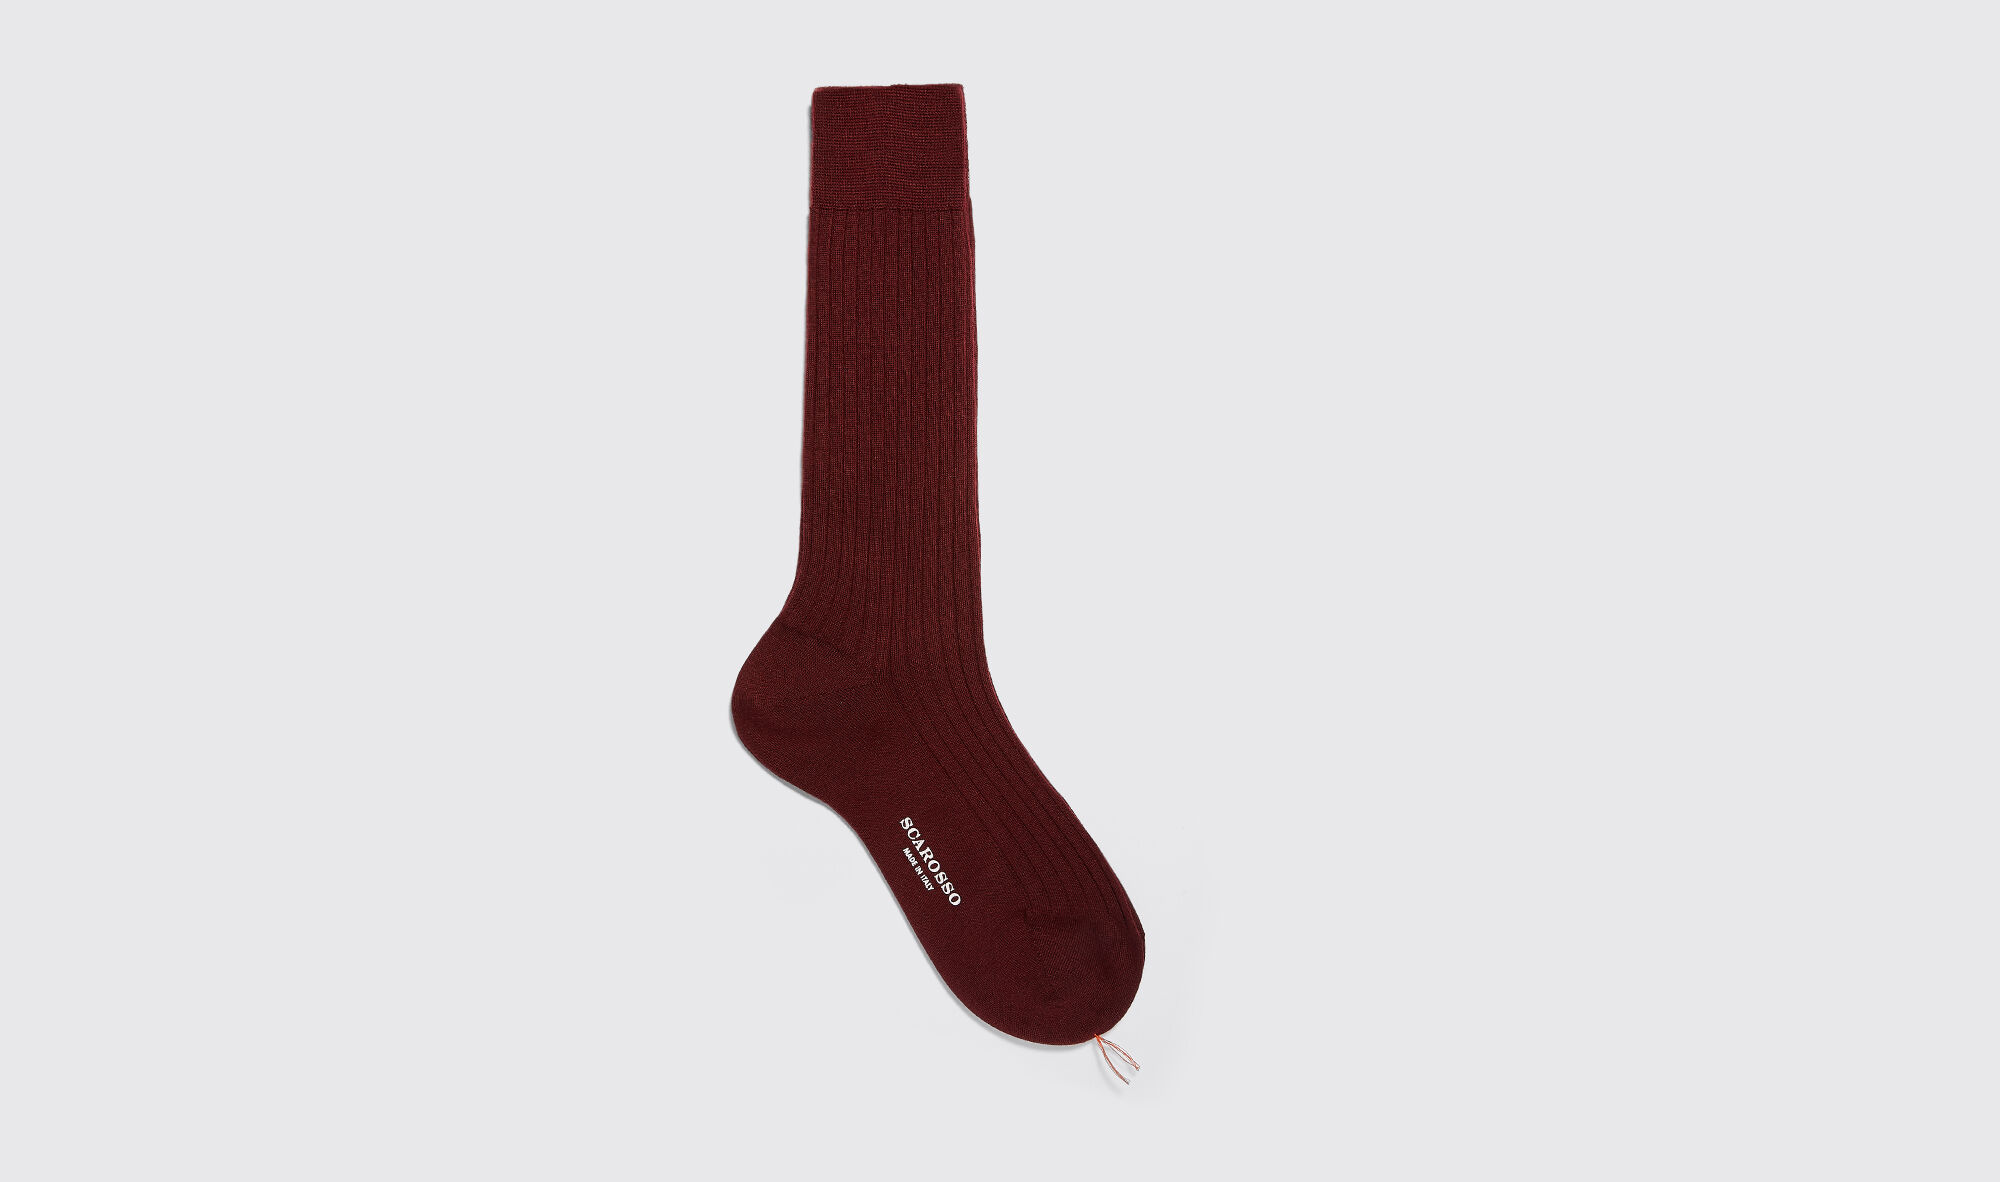 Scarosso Burgundy Wool Calf Socks - Uomo Calze Borgogna - Lana Merino 44-45